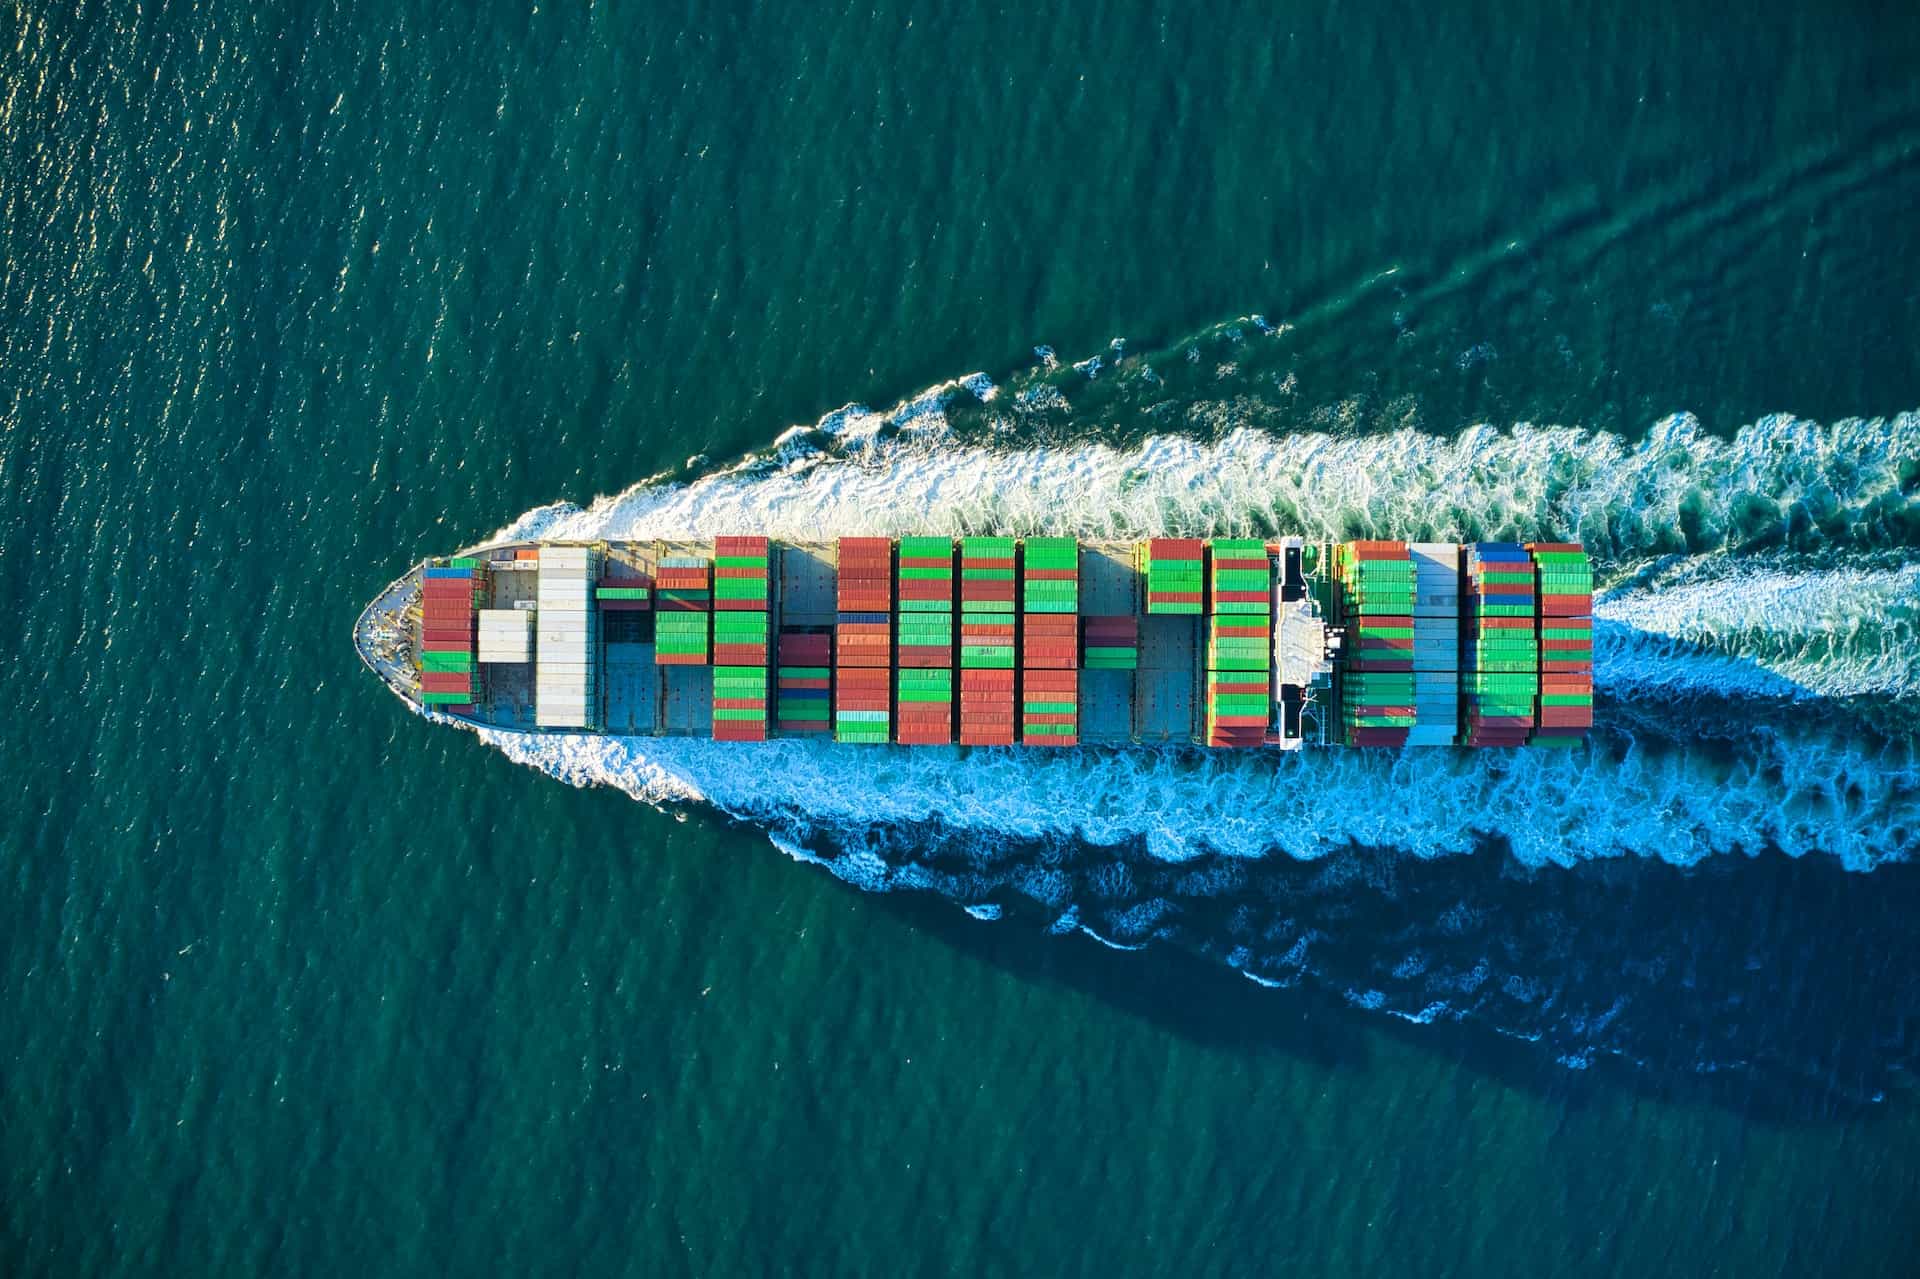 aerial view of a cargo ship